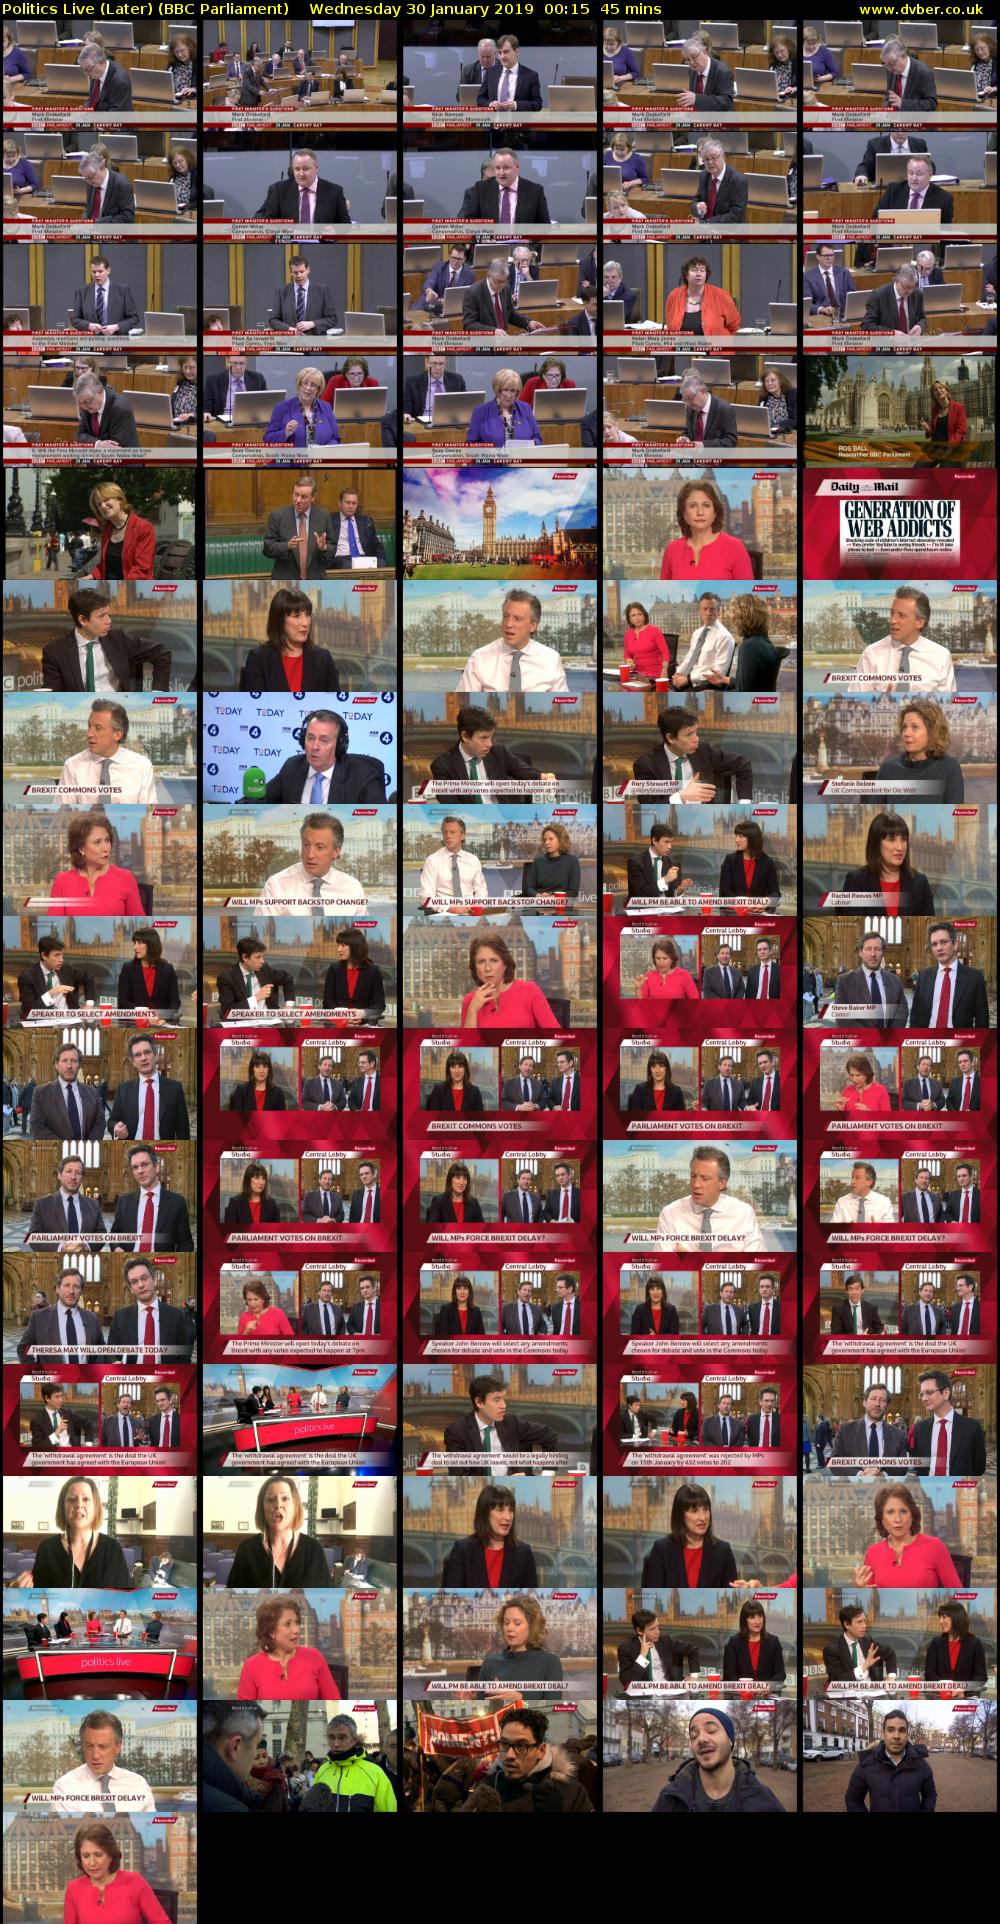 Politics Live (Later) (BBC Parliament) Wednesday 30 January 2019 00:15 - 01:00